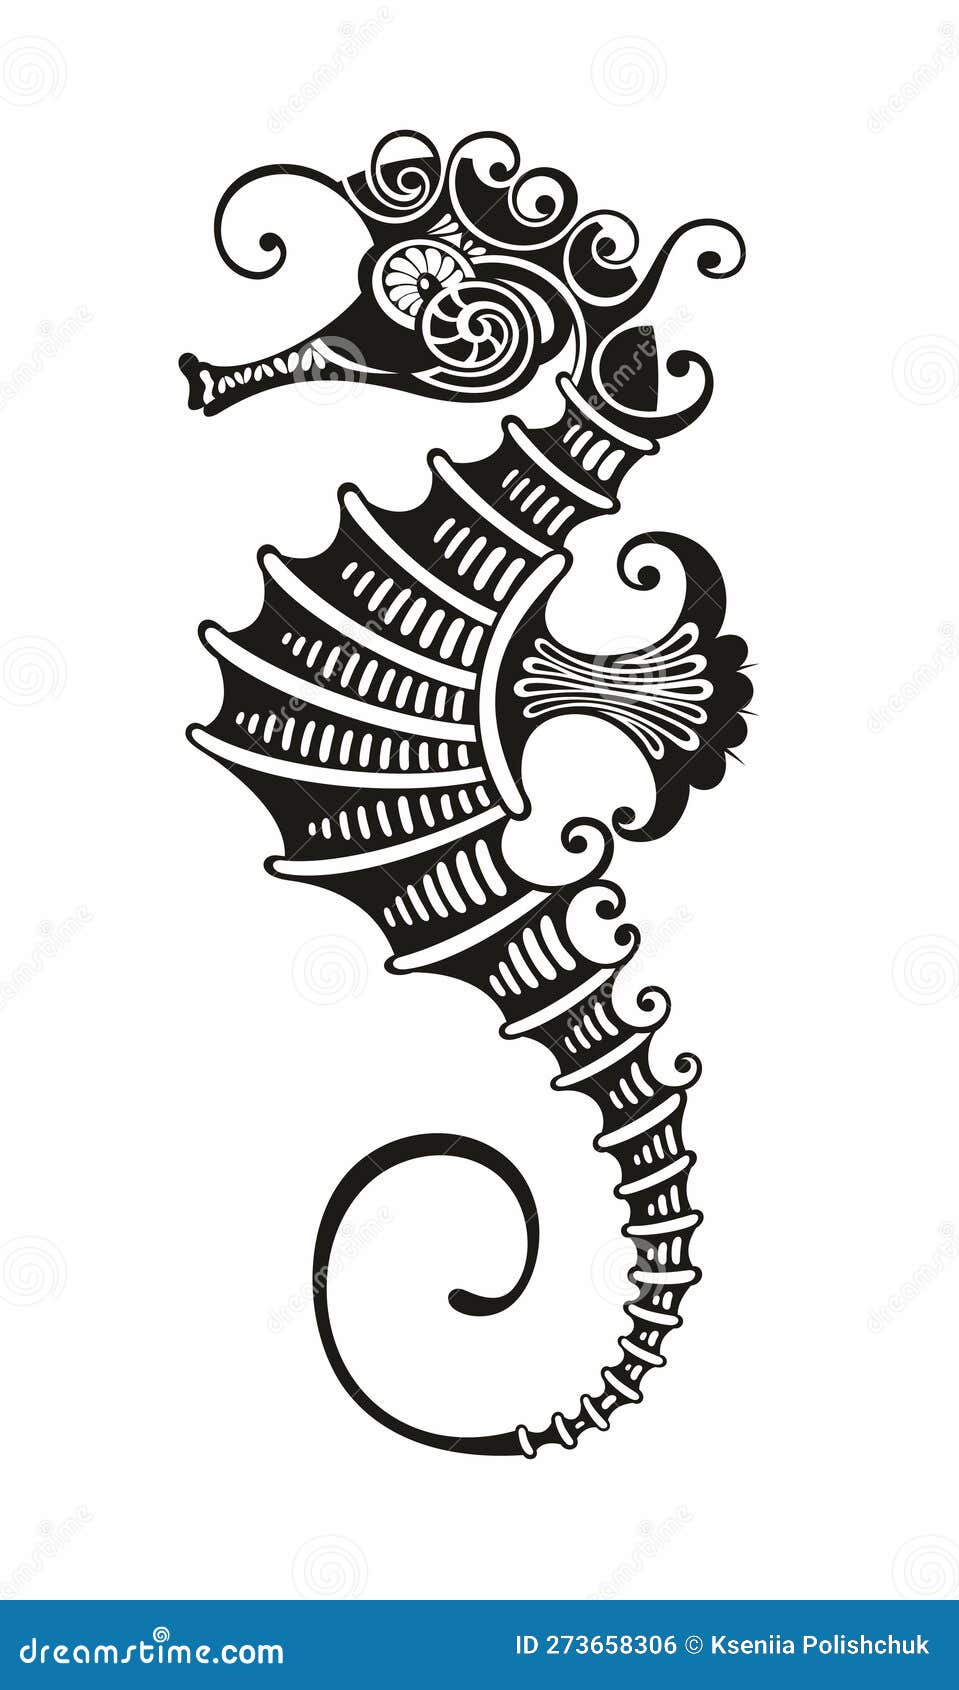 Cavalo marinho  Seahorse tattoo, Seahorse drawing, Animal drawings